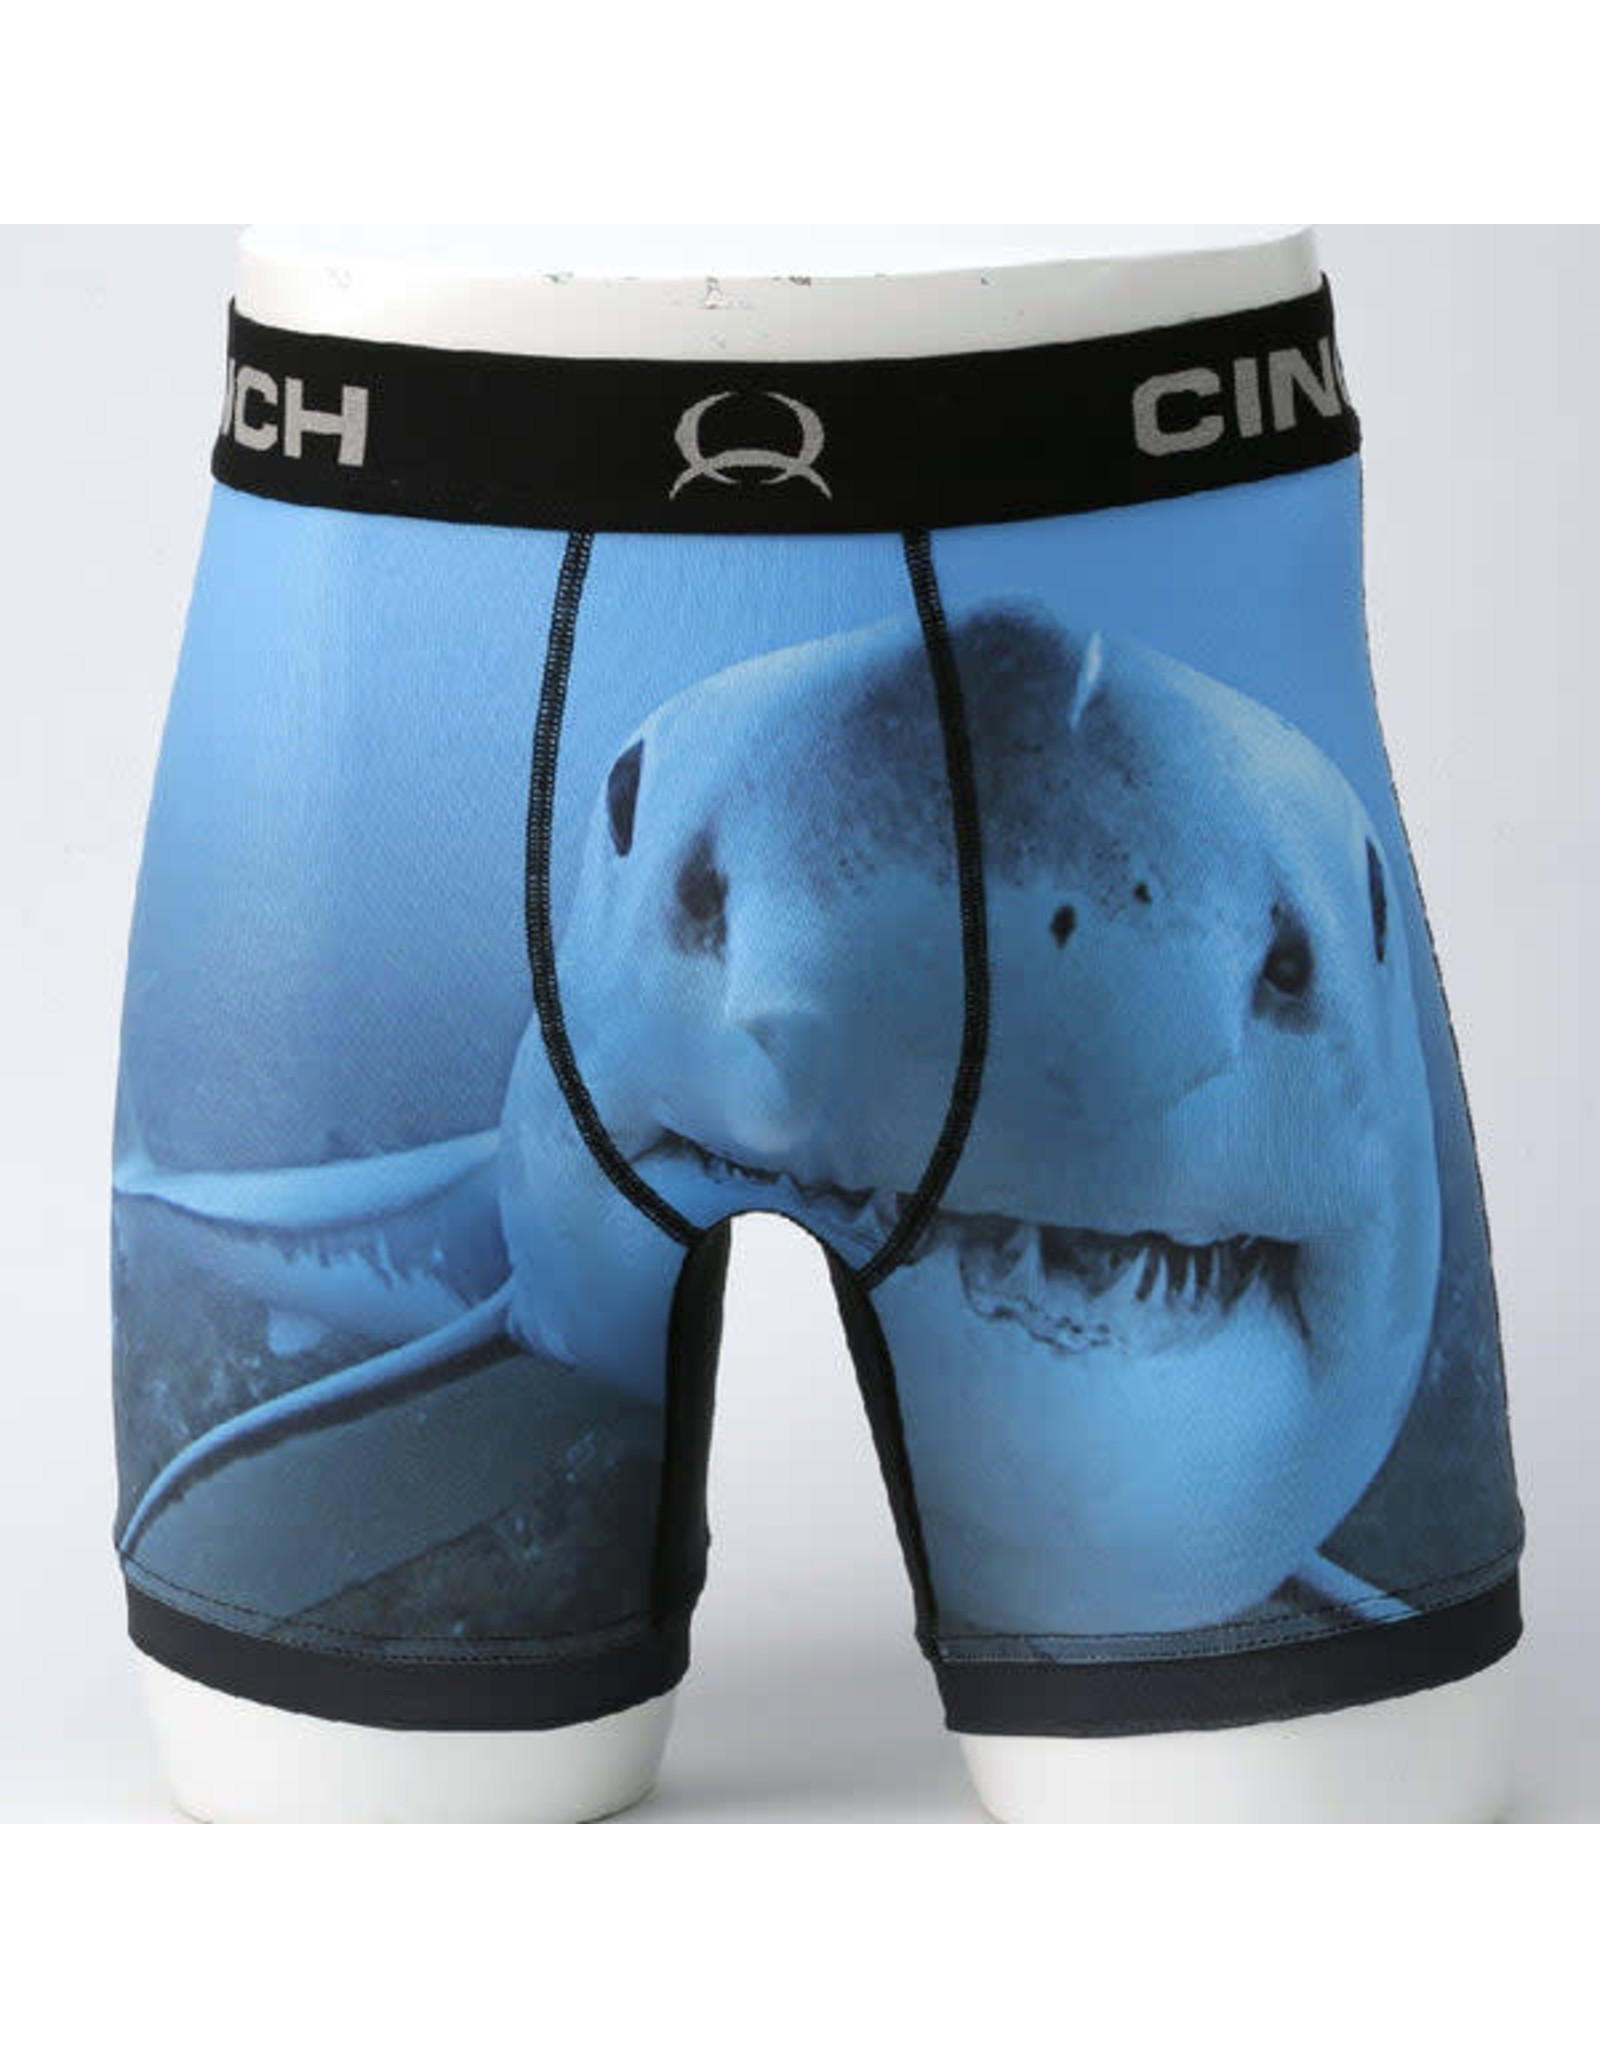 Cinch Men's Shark ArenaFlex MXY6009015 Boxer Briefs